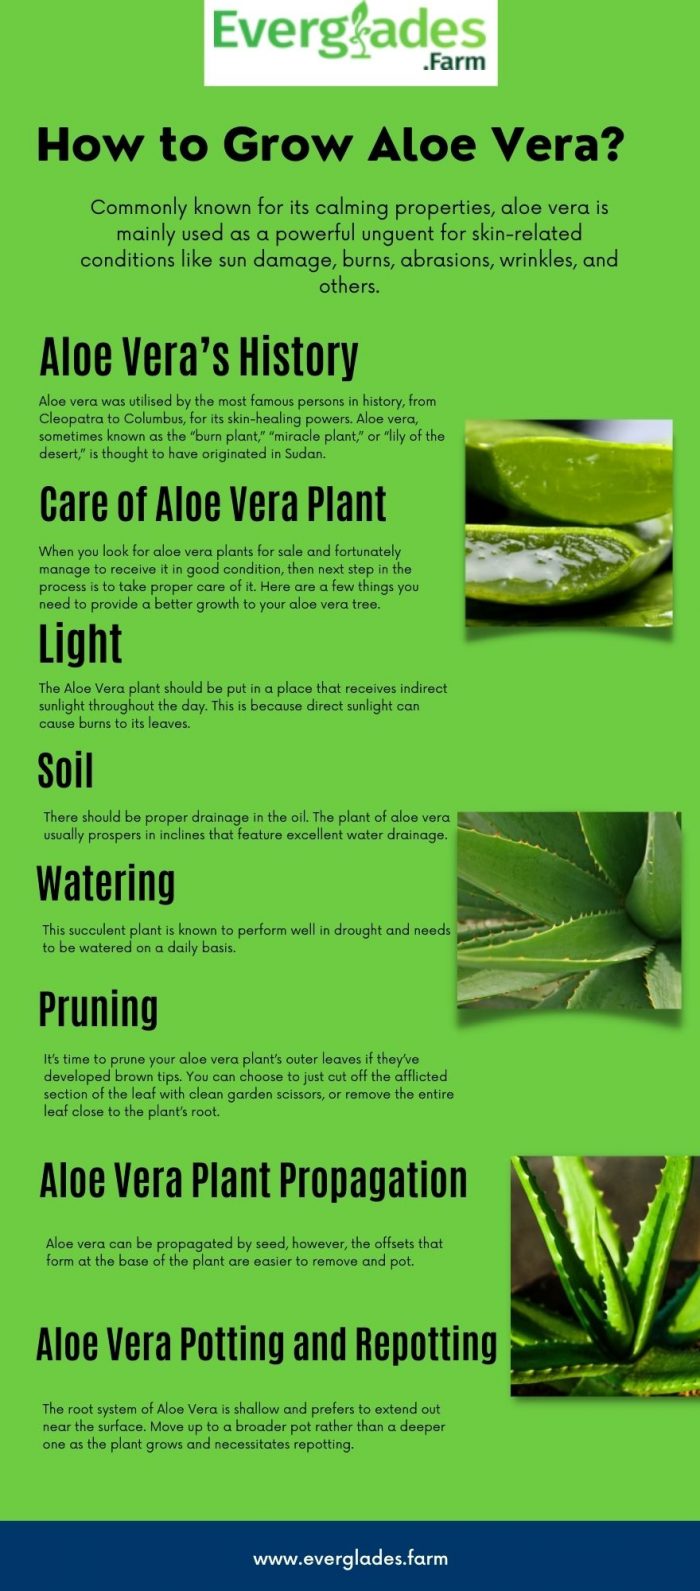 How to Grow Aloe Vera?